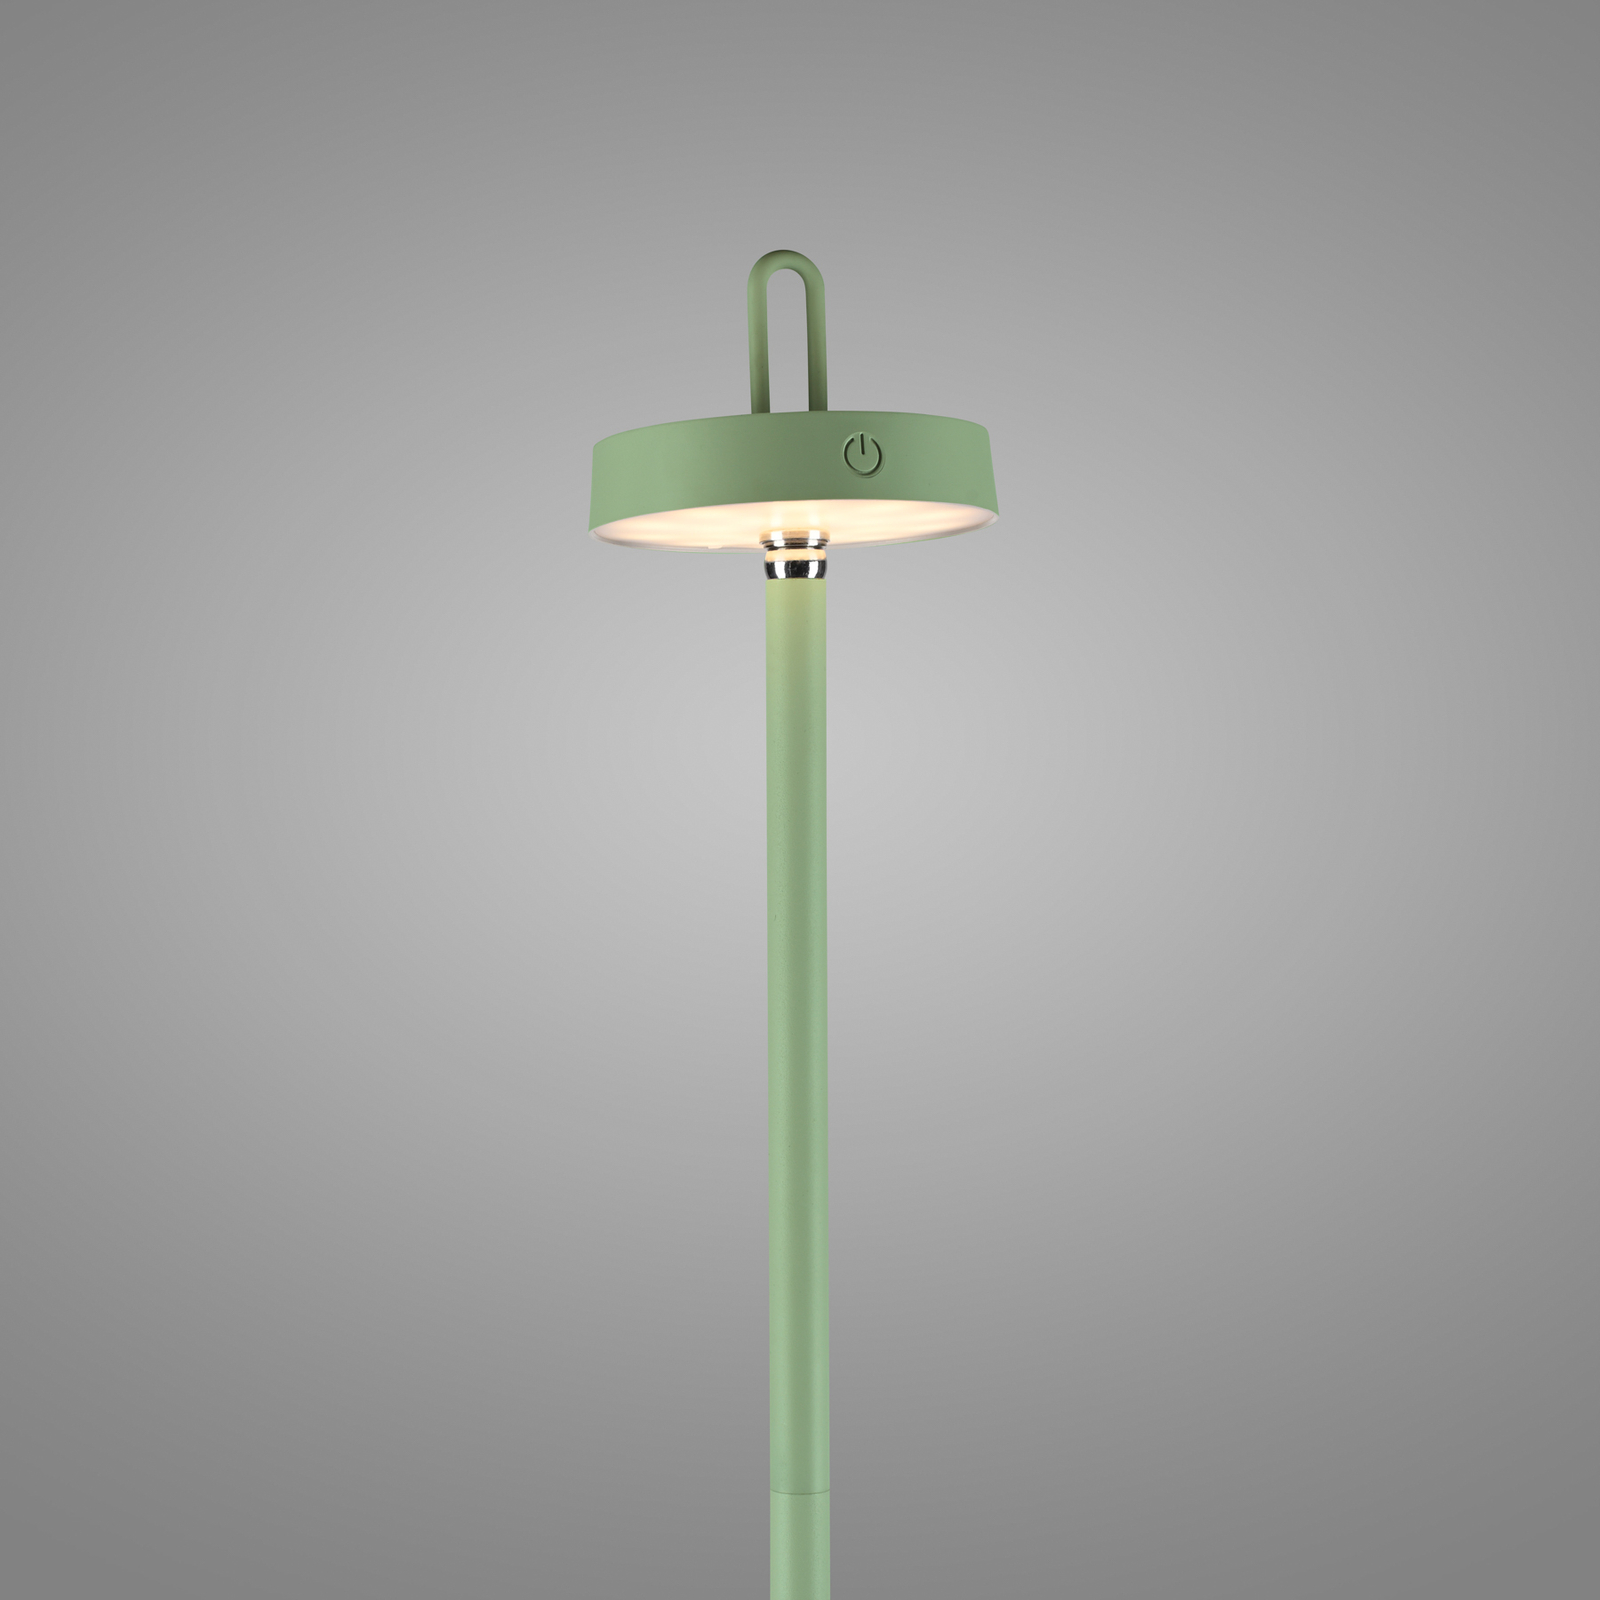 JUST LIGHT. Akumulatorowa lampa stojąca LED Amag, zielona, żelazo, IP44